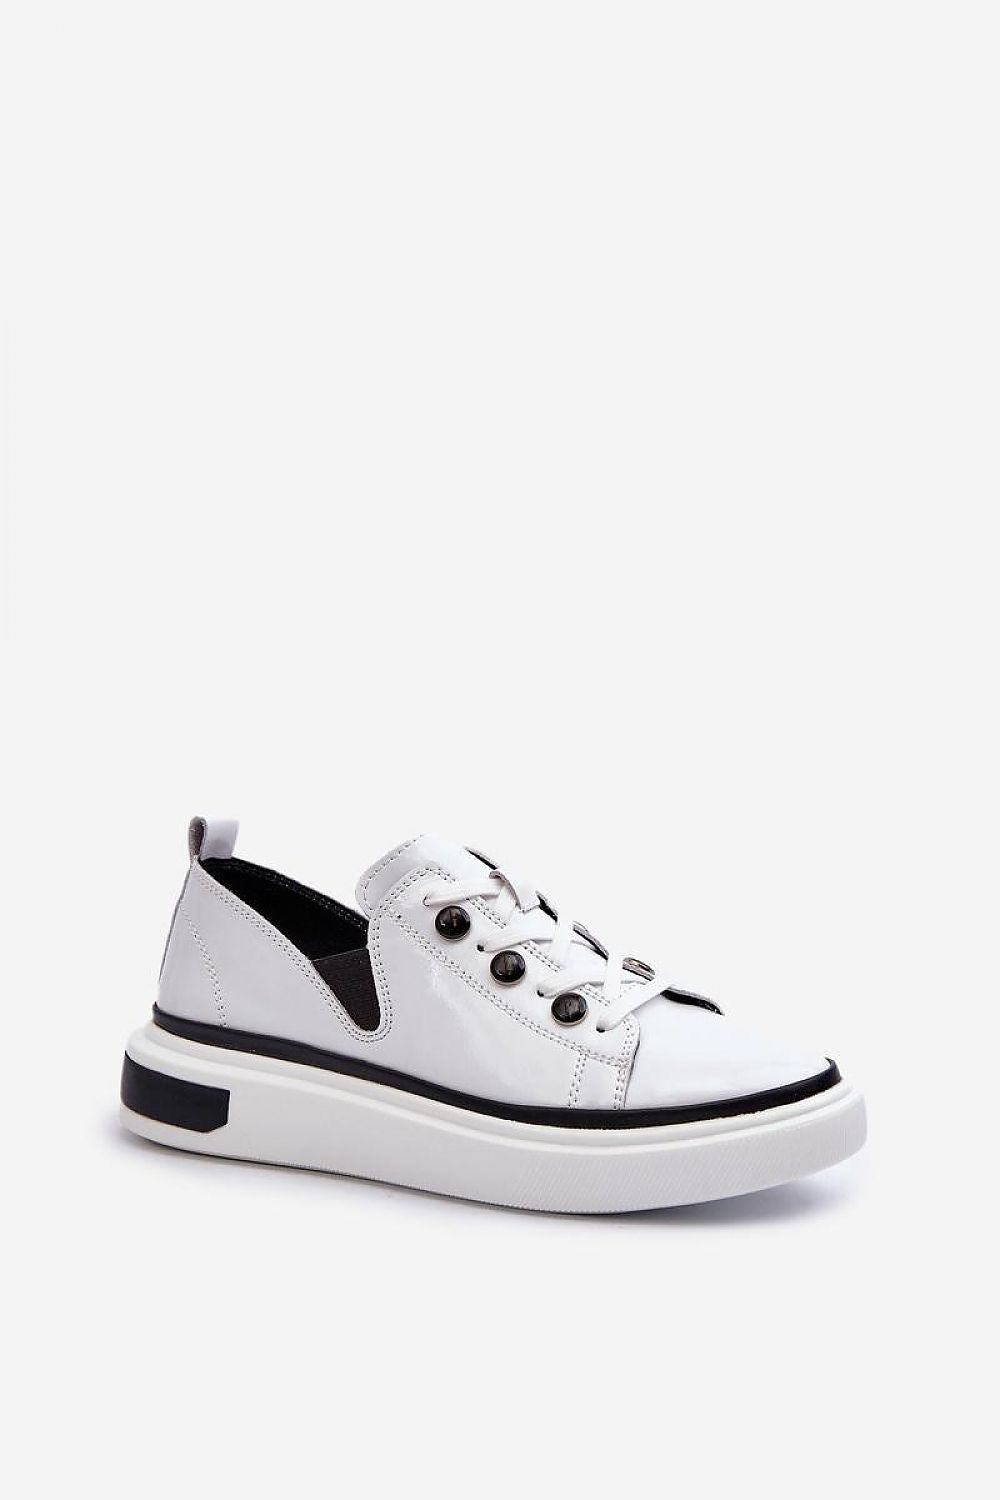 TEEK - White Ellipse Laced Sneakers SHOES TEEK MH 6.5  